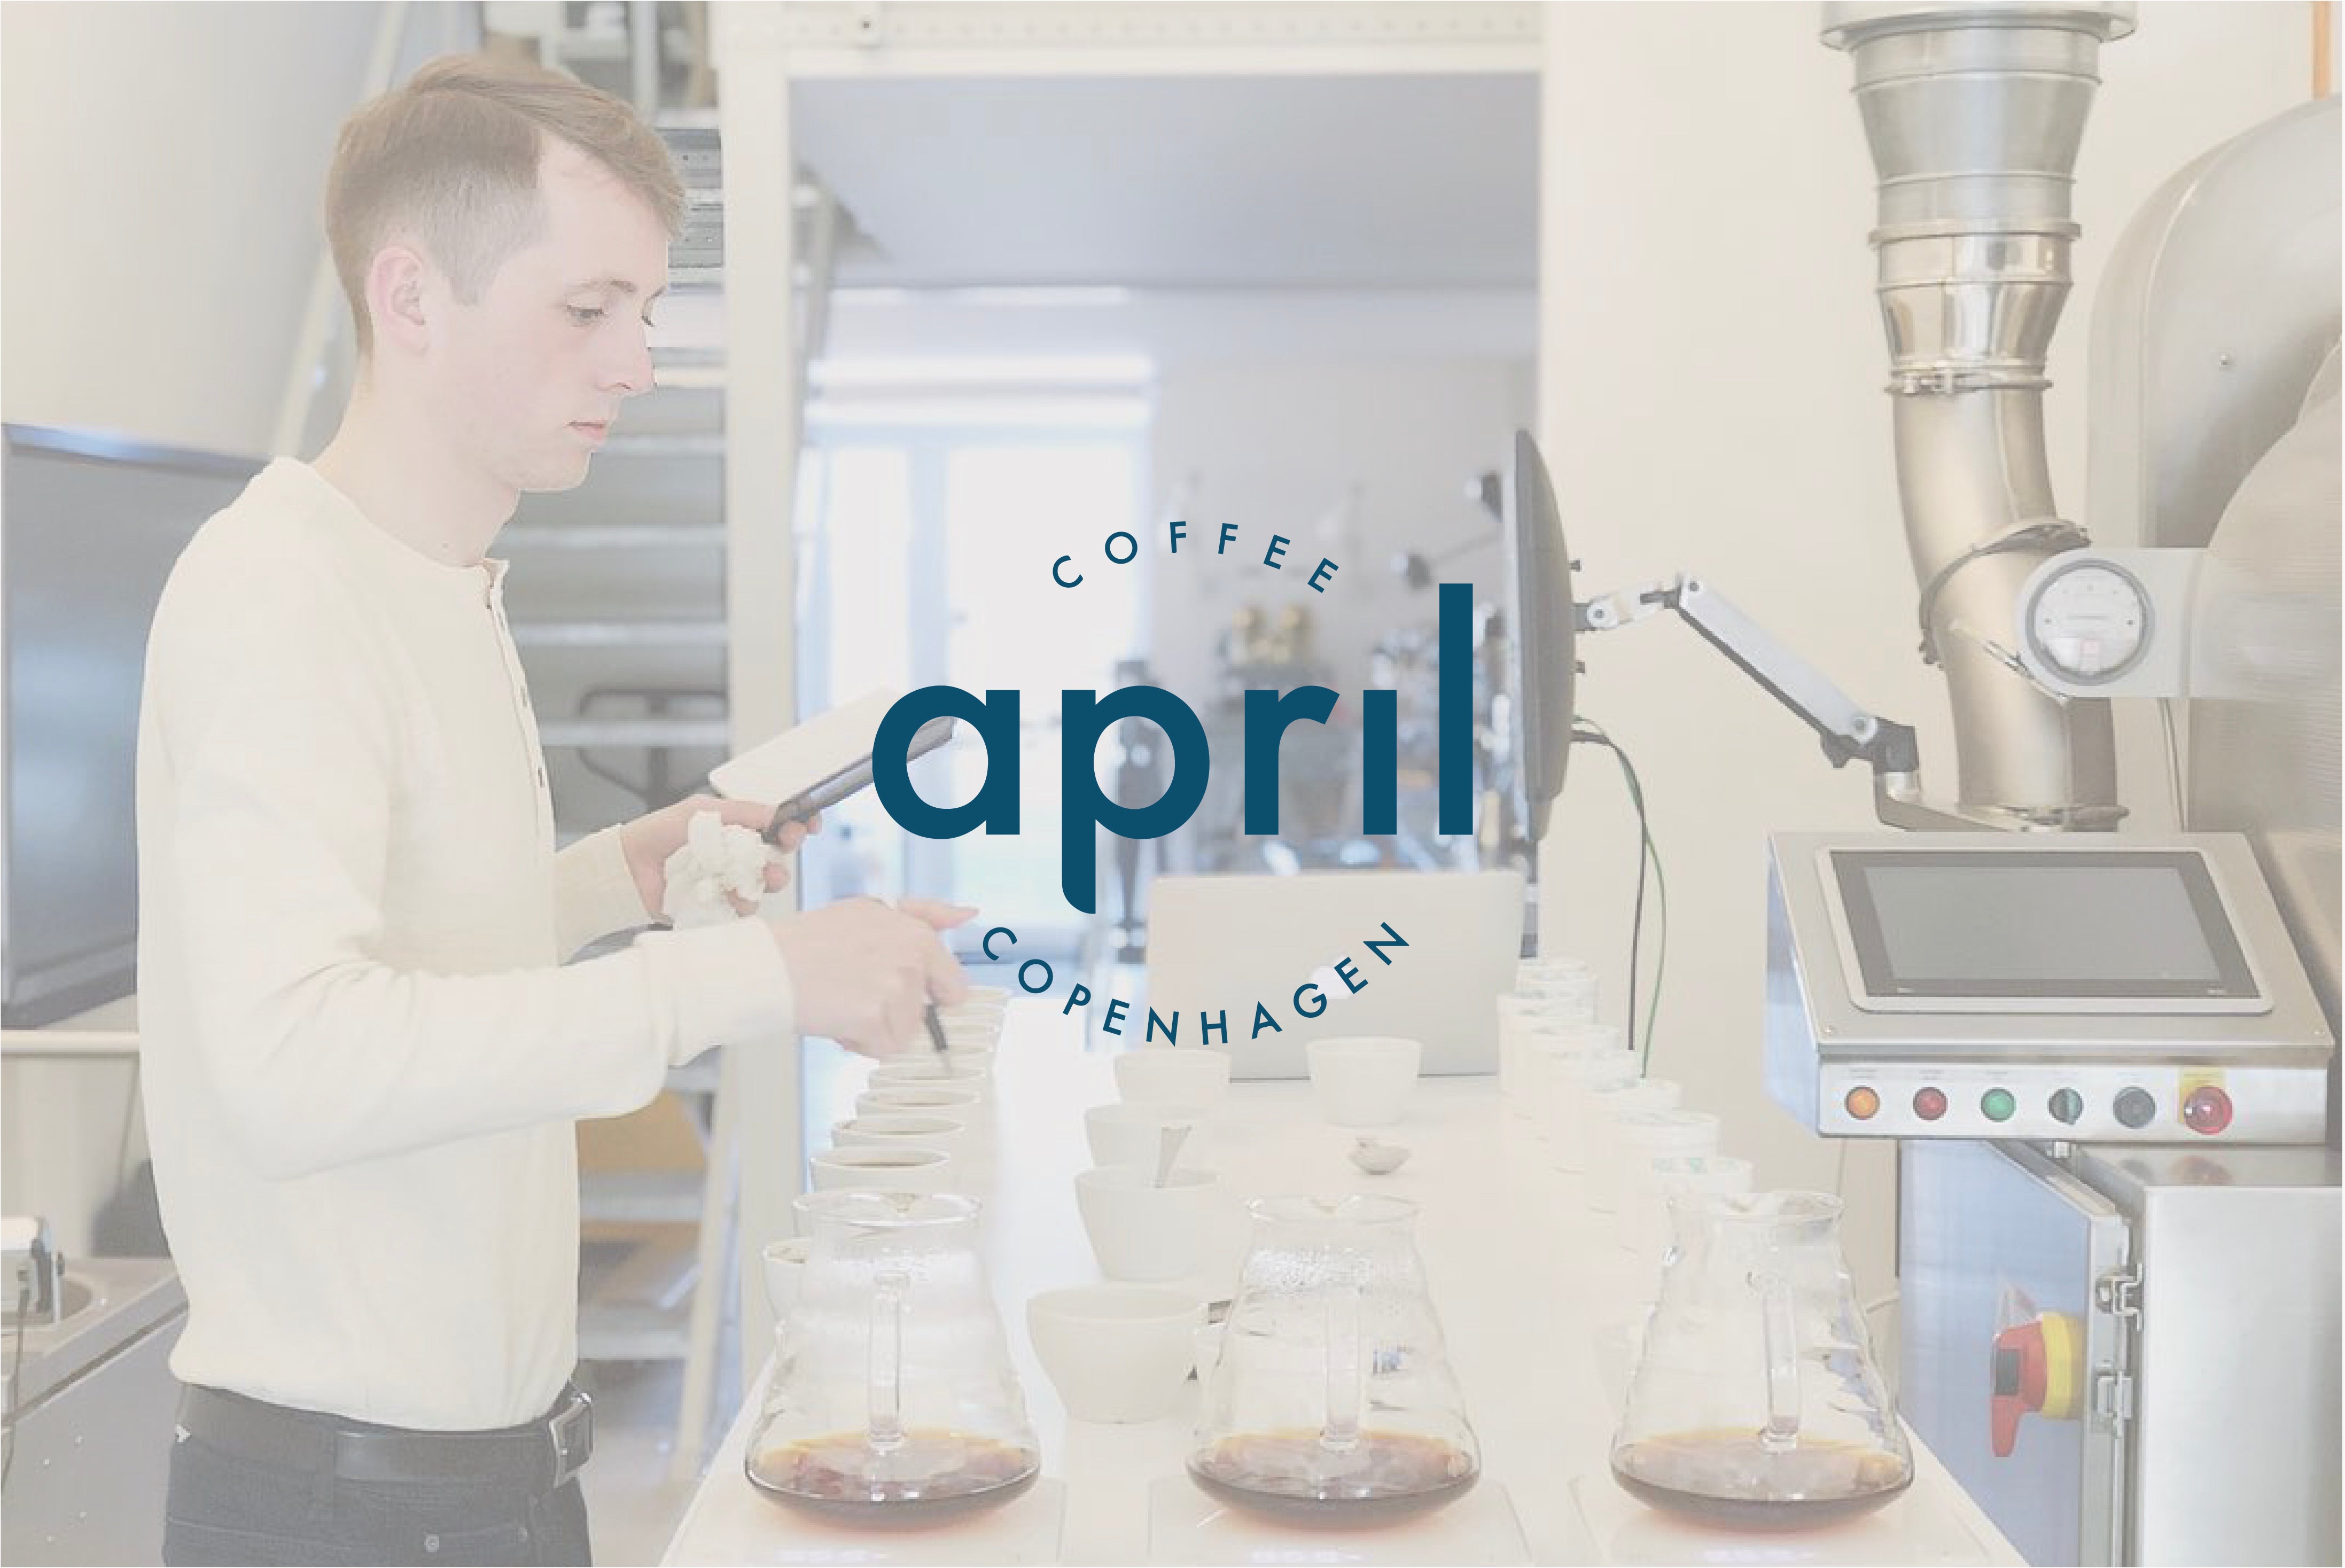 April Coffee Roasters